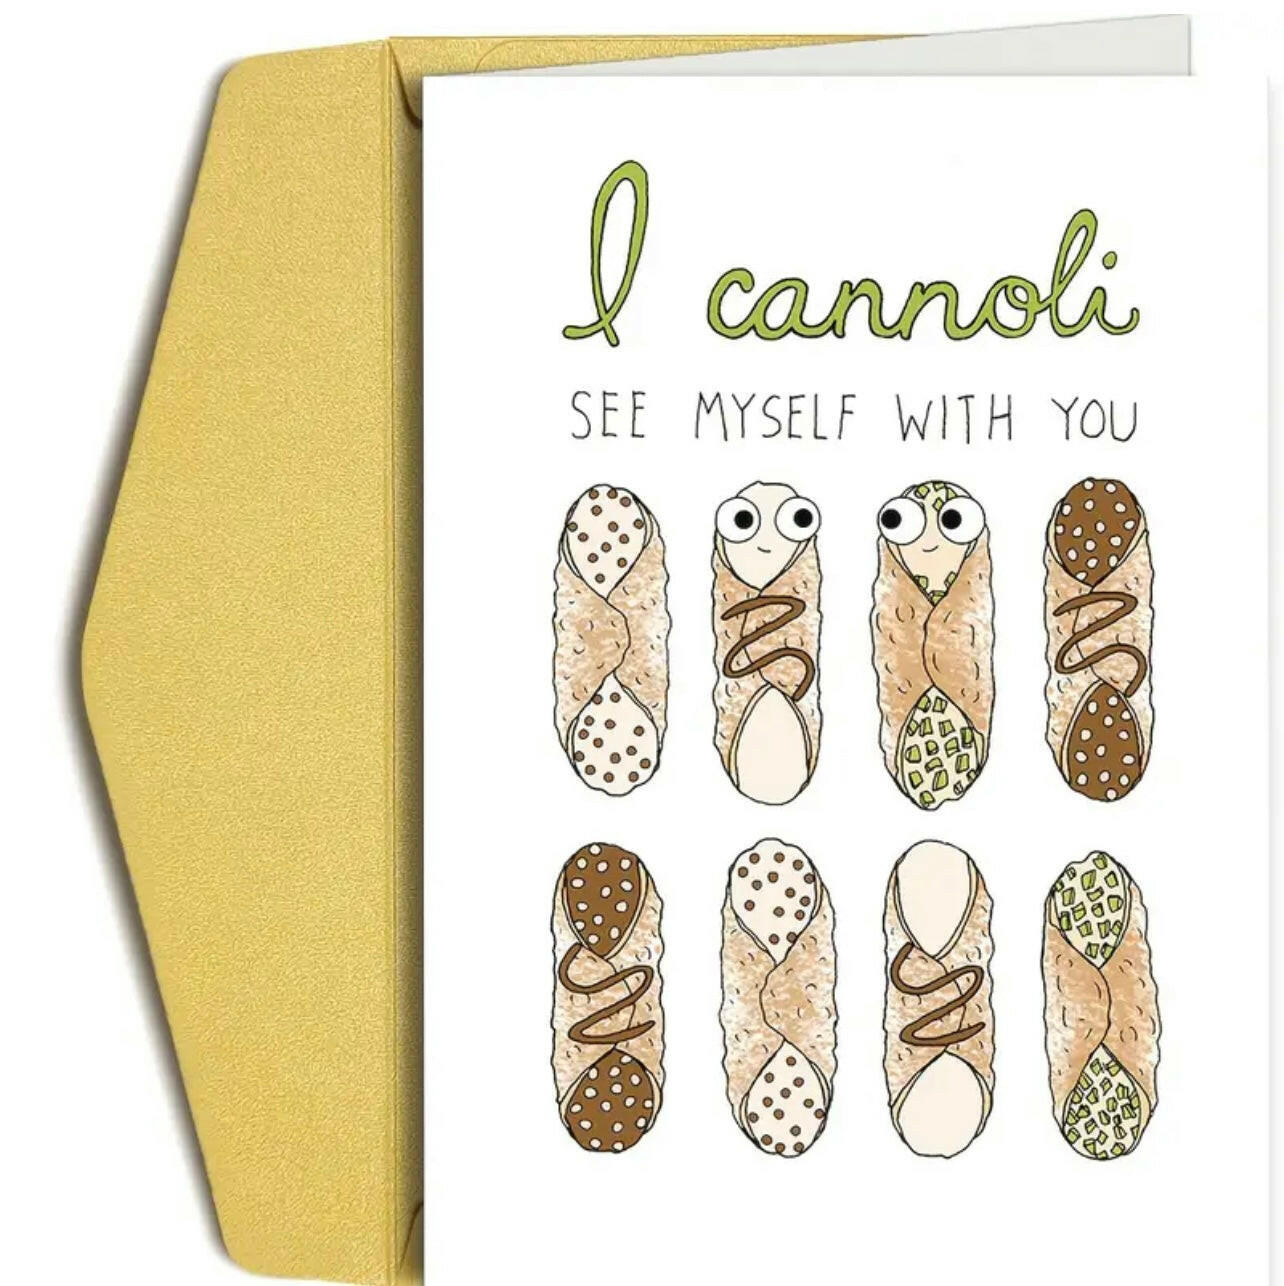 I Cannoli See Myself With You - Cannoli Card.